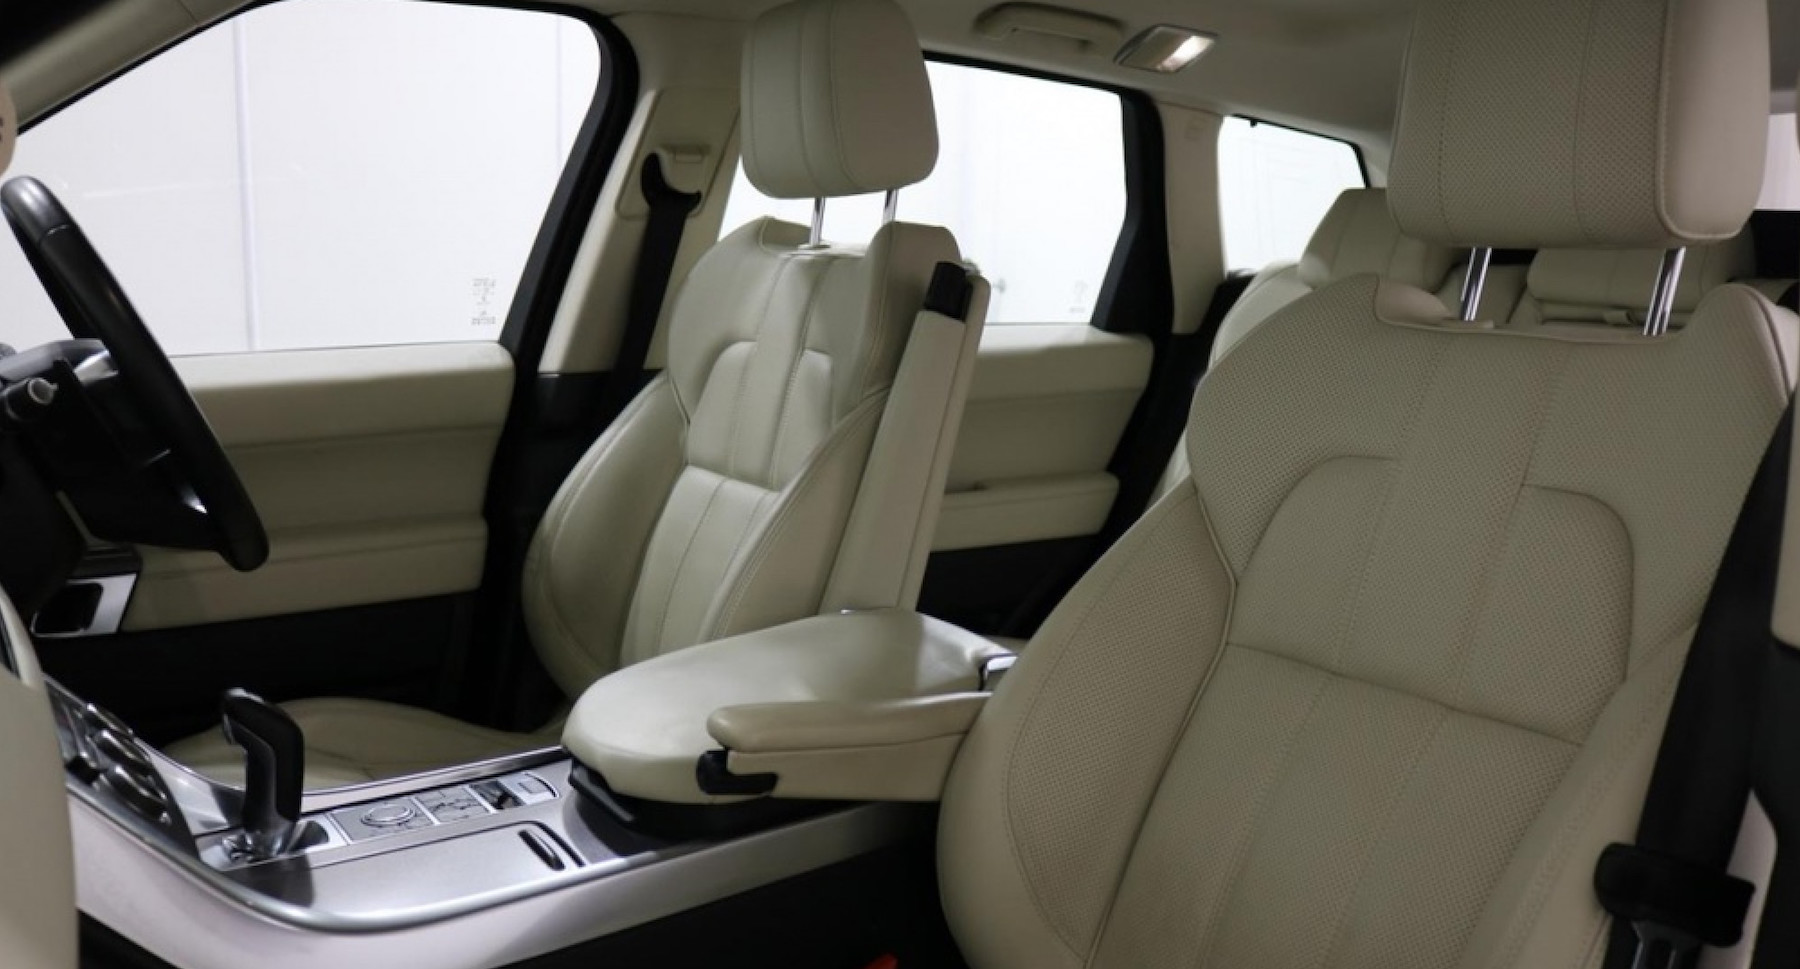 Range Rover Sport cream leather interior